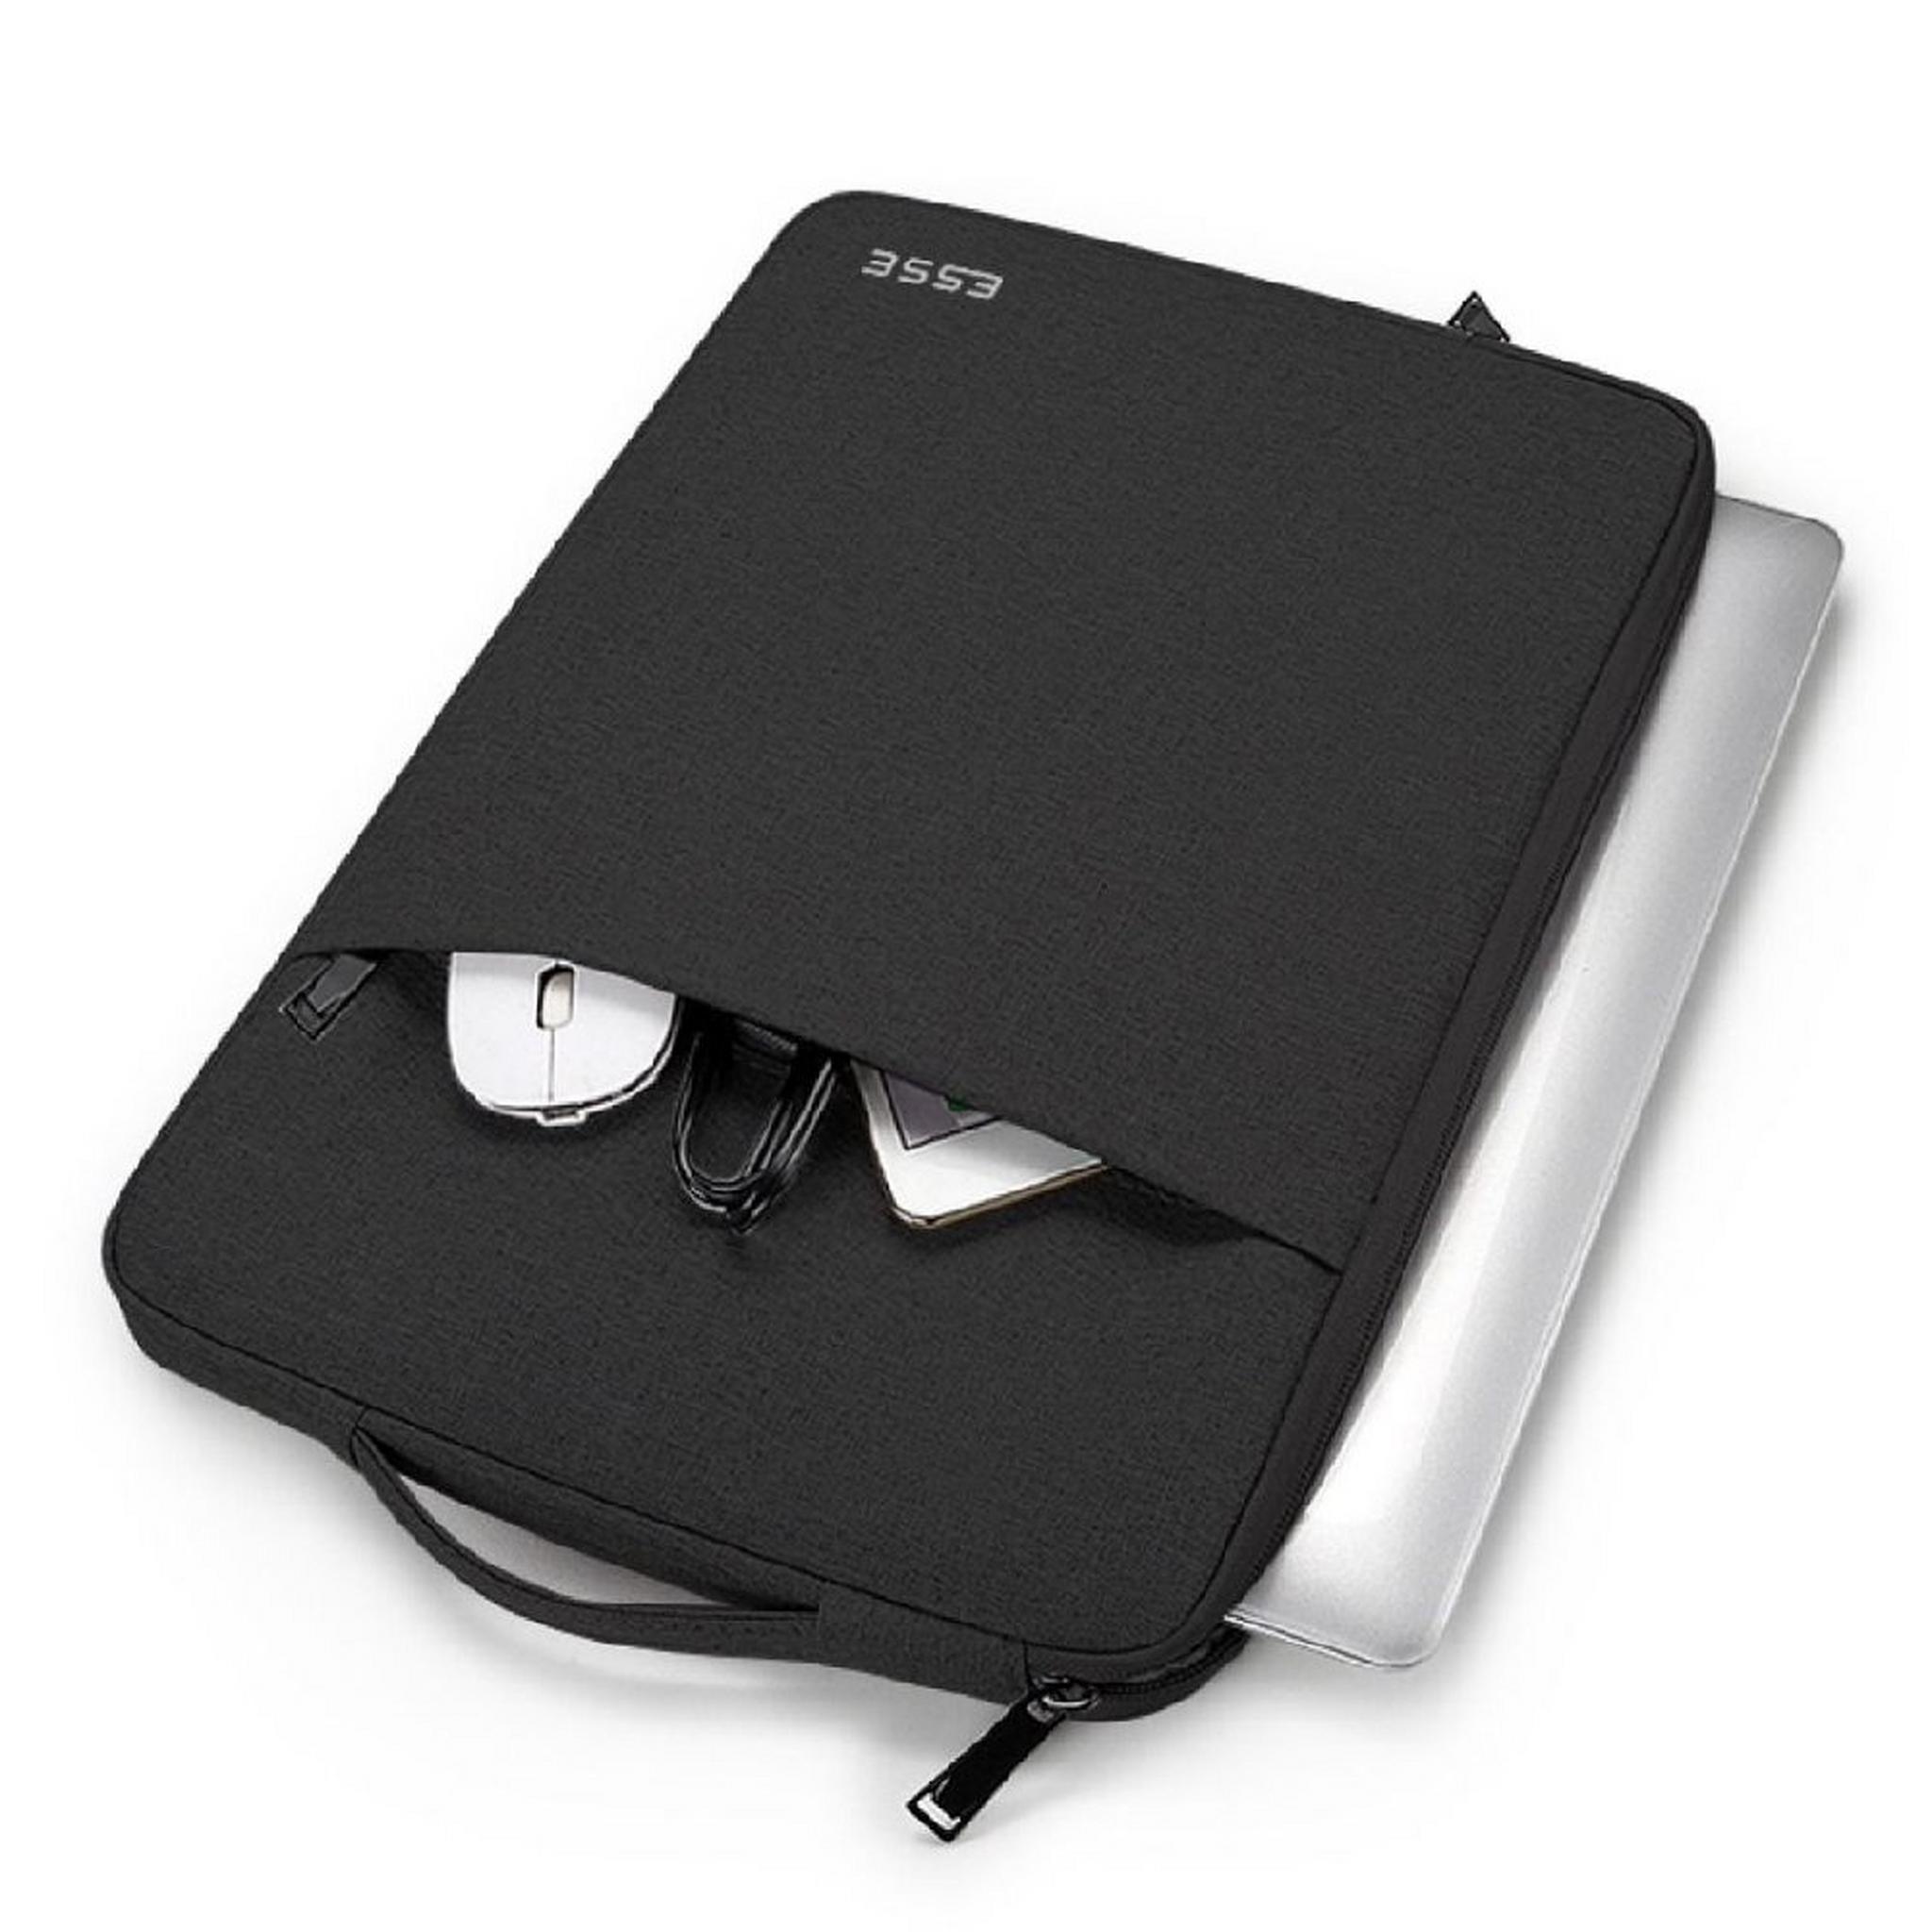 HYPHEN ESSE 14-inch Laptop Sleeve, ESL-XIVBK3707 - Black